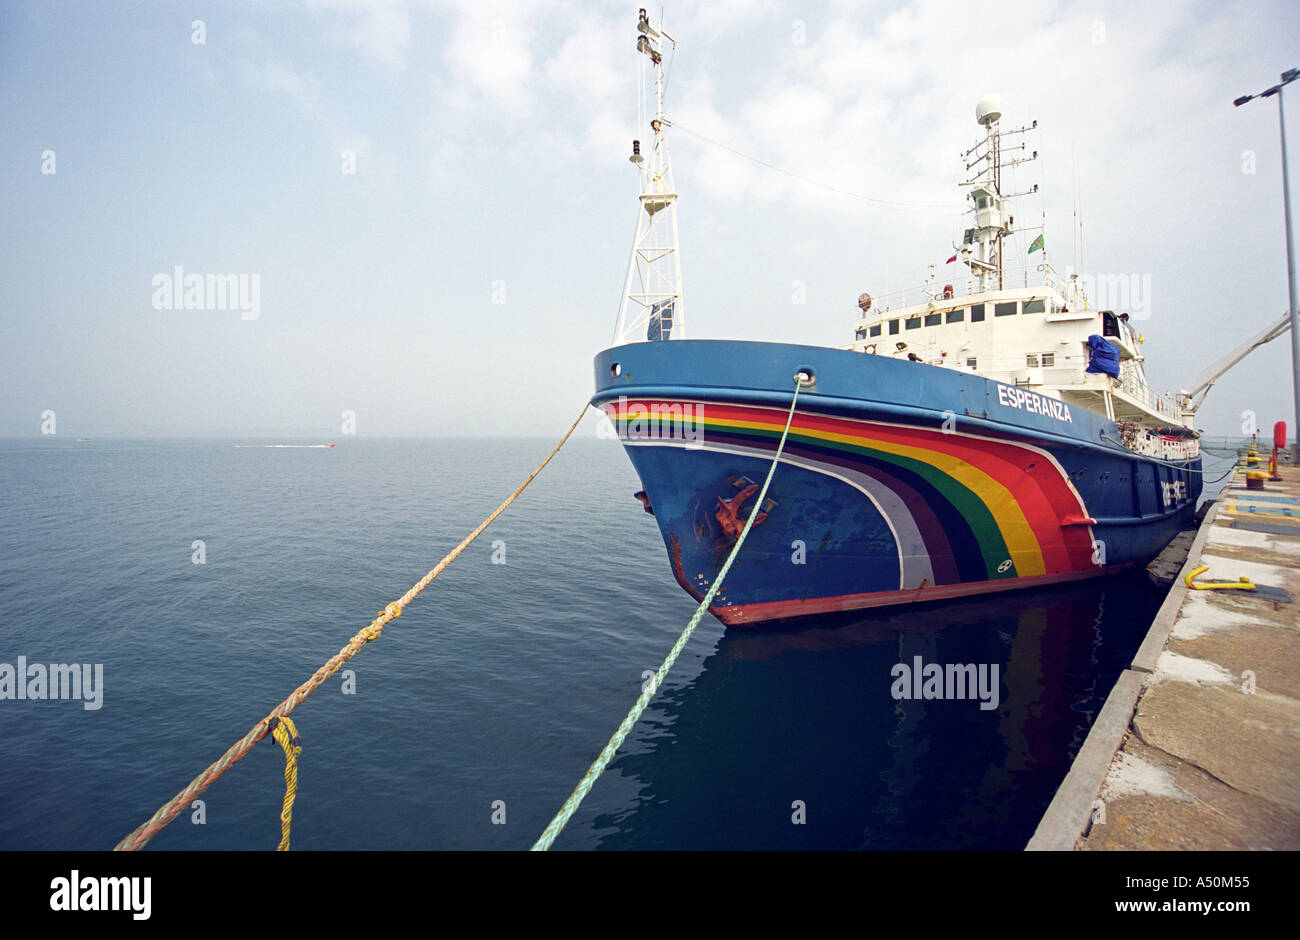 The Greenpeace ship Esperanza in dock Stock Photo